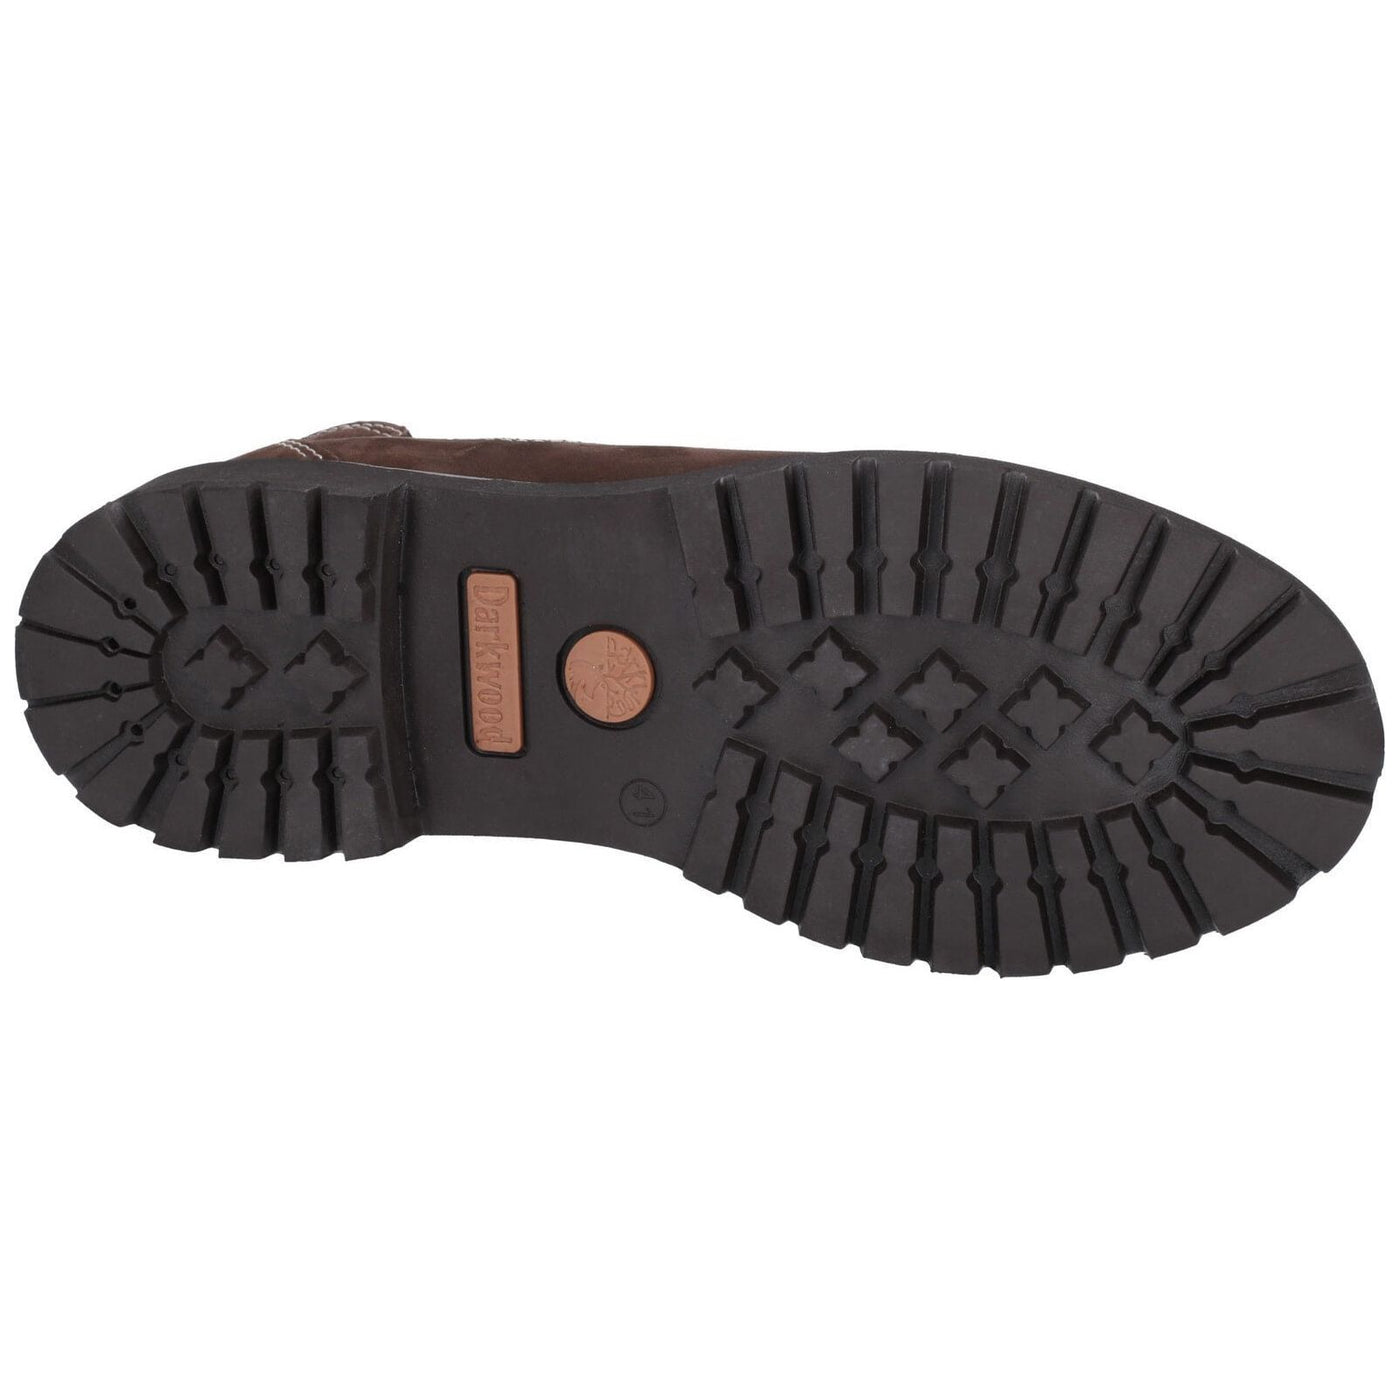 Darkwood Hawthorn II Waterproof Casual Walking Boots-Brown-3